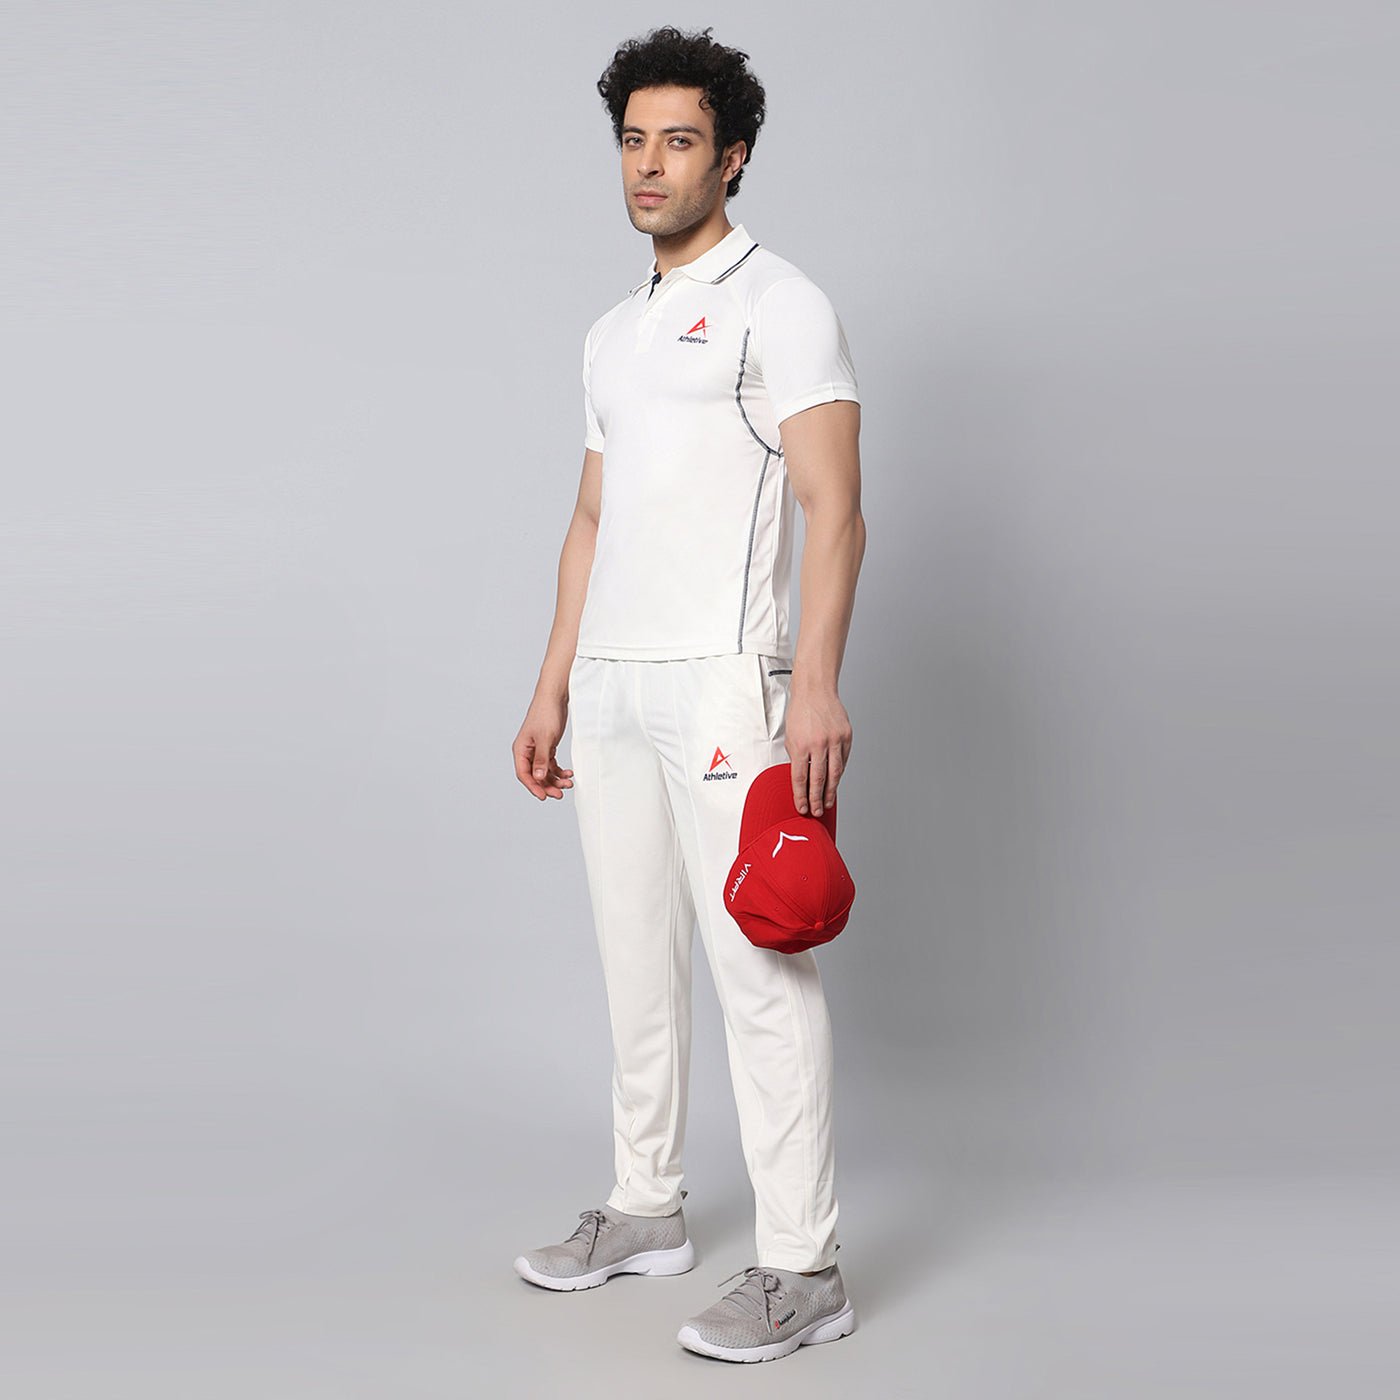 Athletive Air-Mesh Cricket Whites Half Sleevs T-shirt